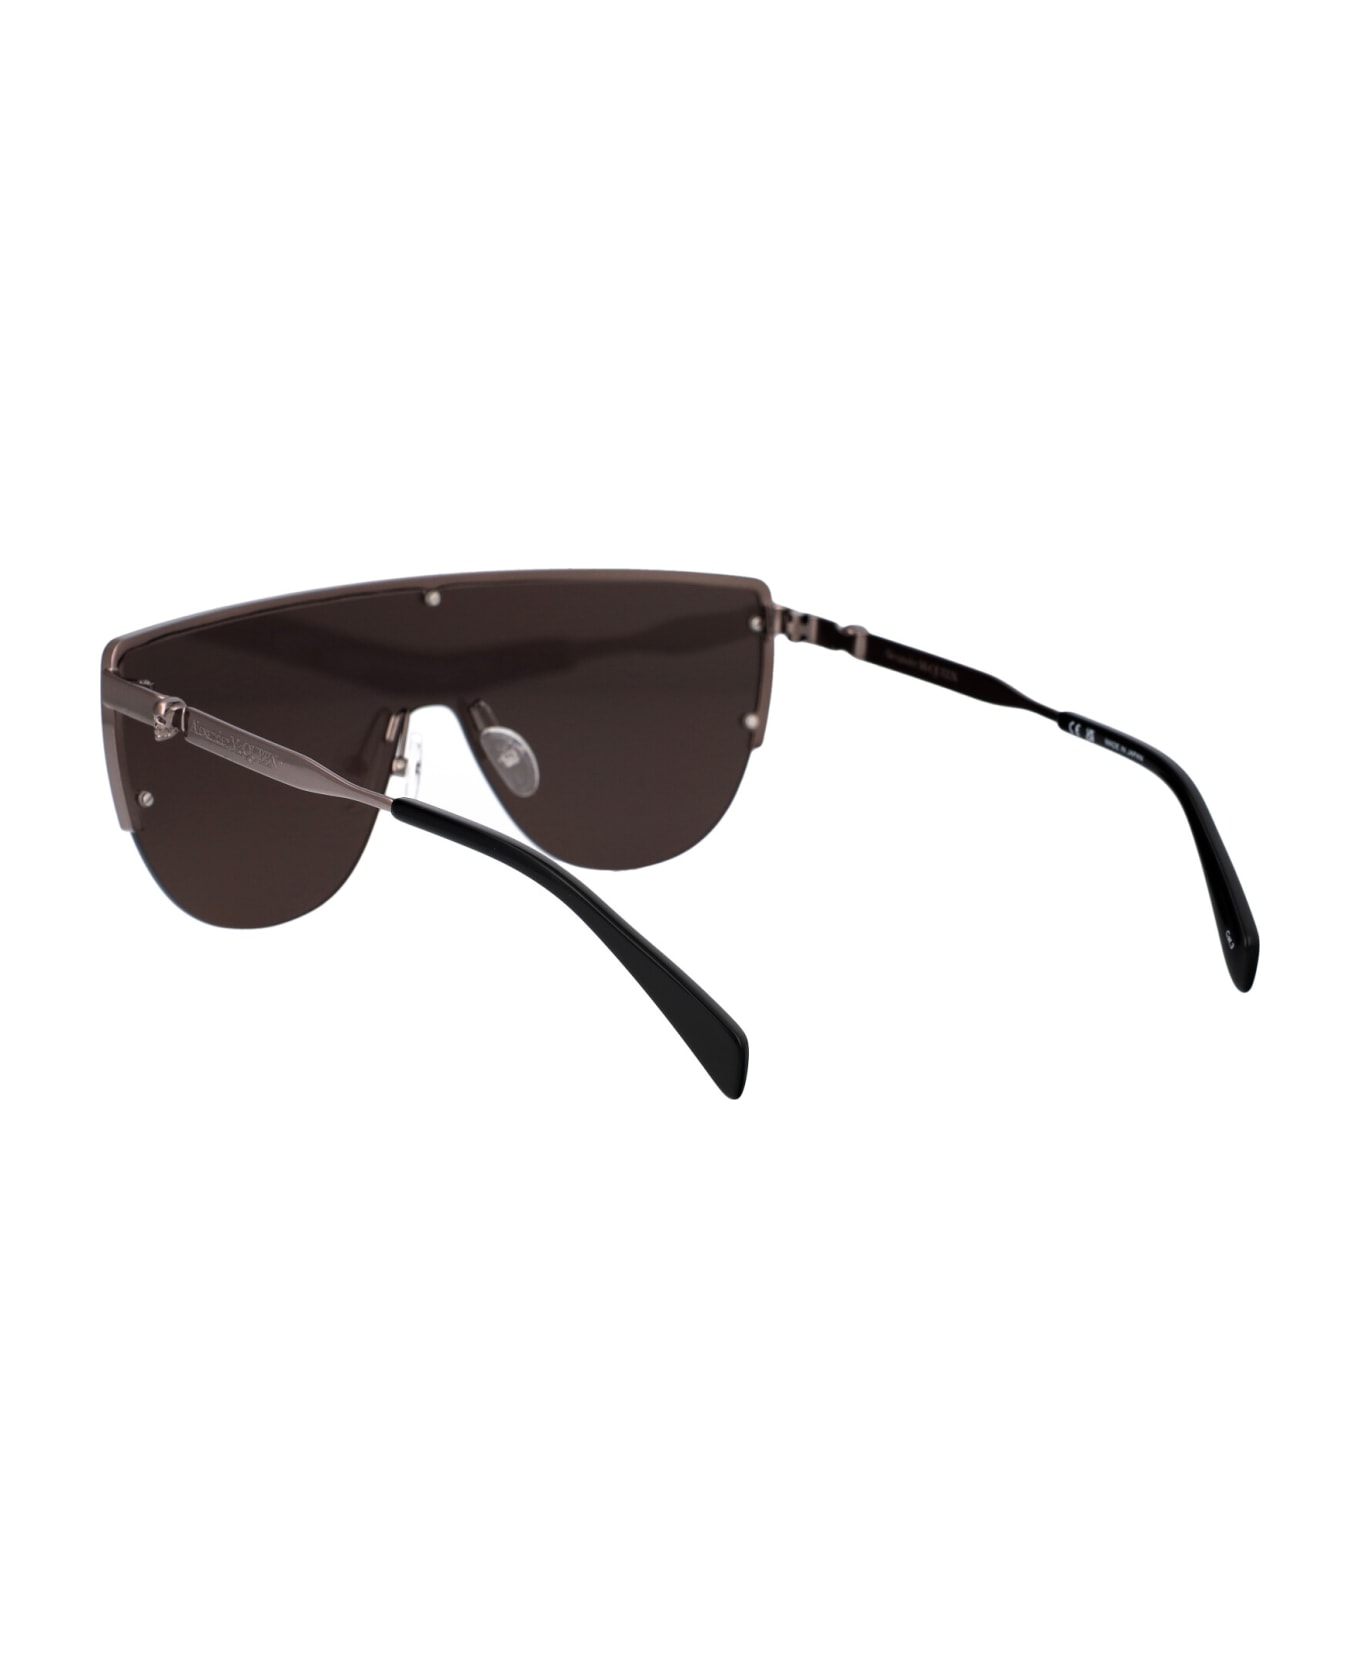 Alexander McQueen Eyewear Am0457s Sunglasses - 001 RUTHENIUM RUTHENIUM GREY サングラス